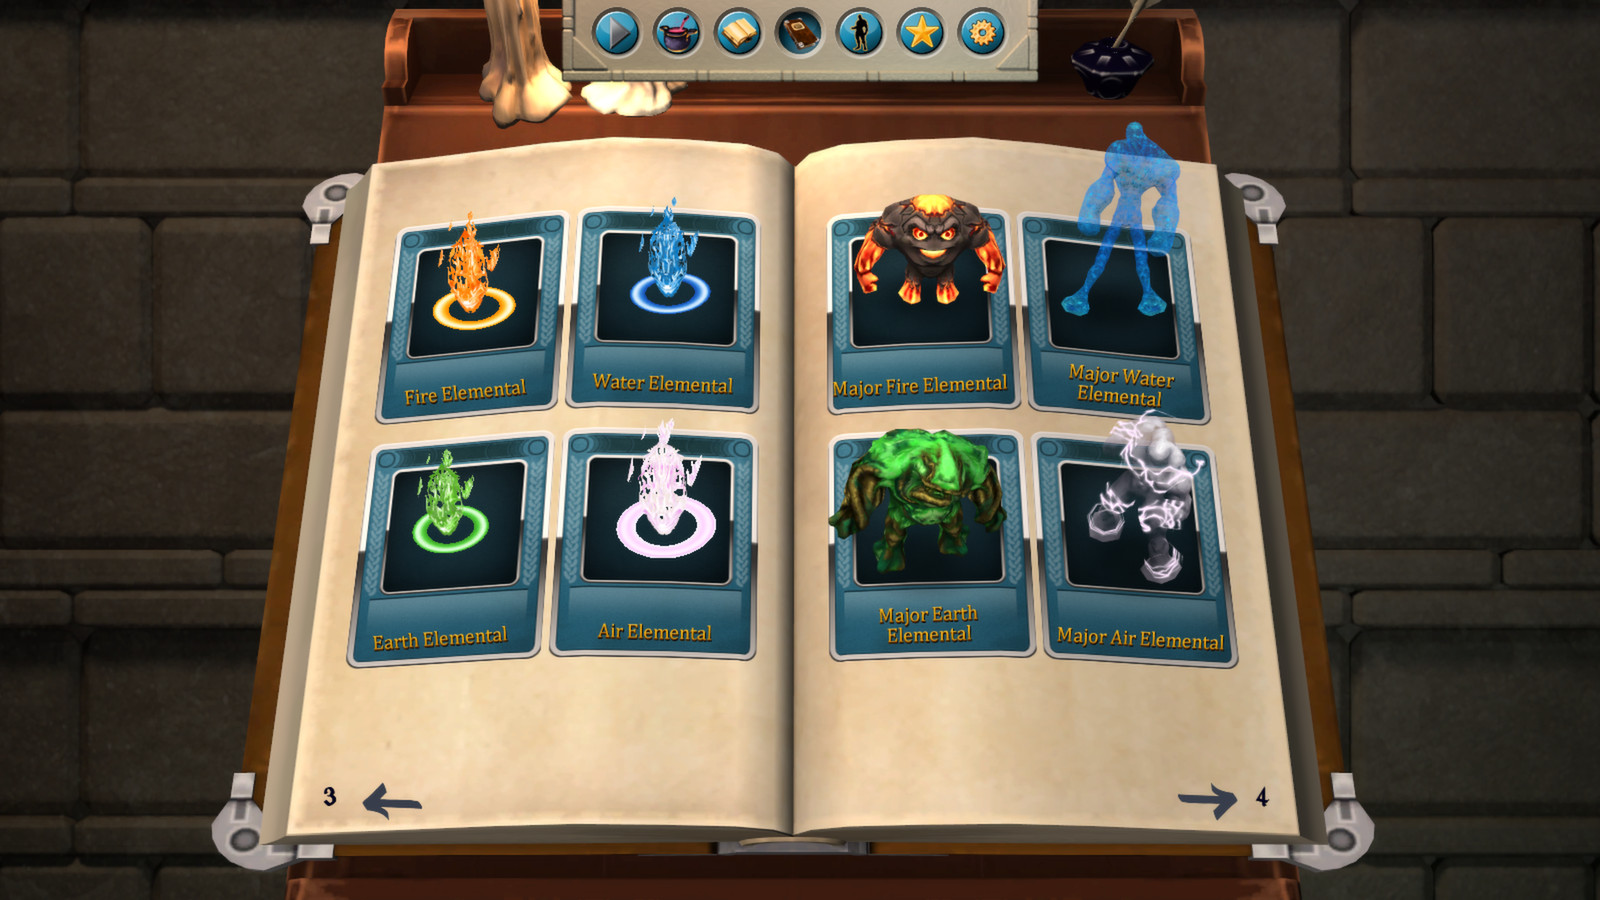 Dungeon of Elements screenshot